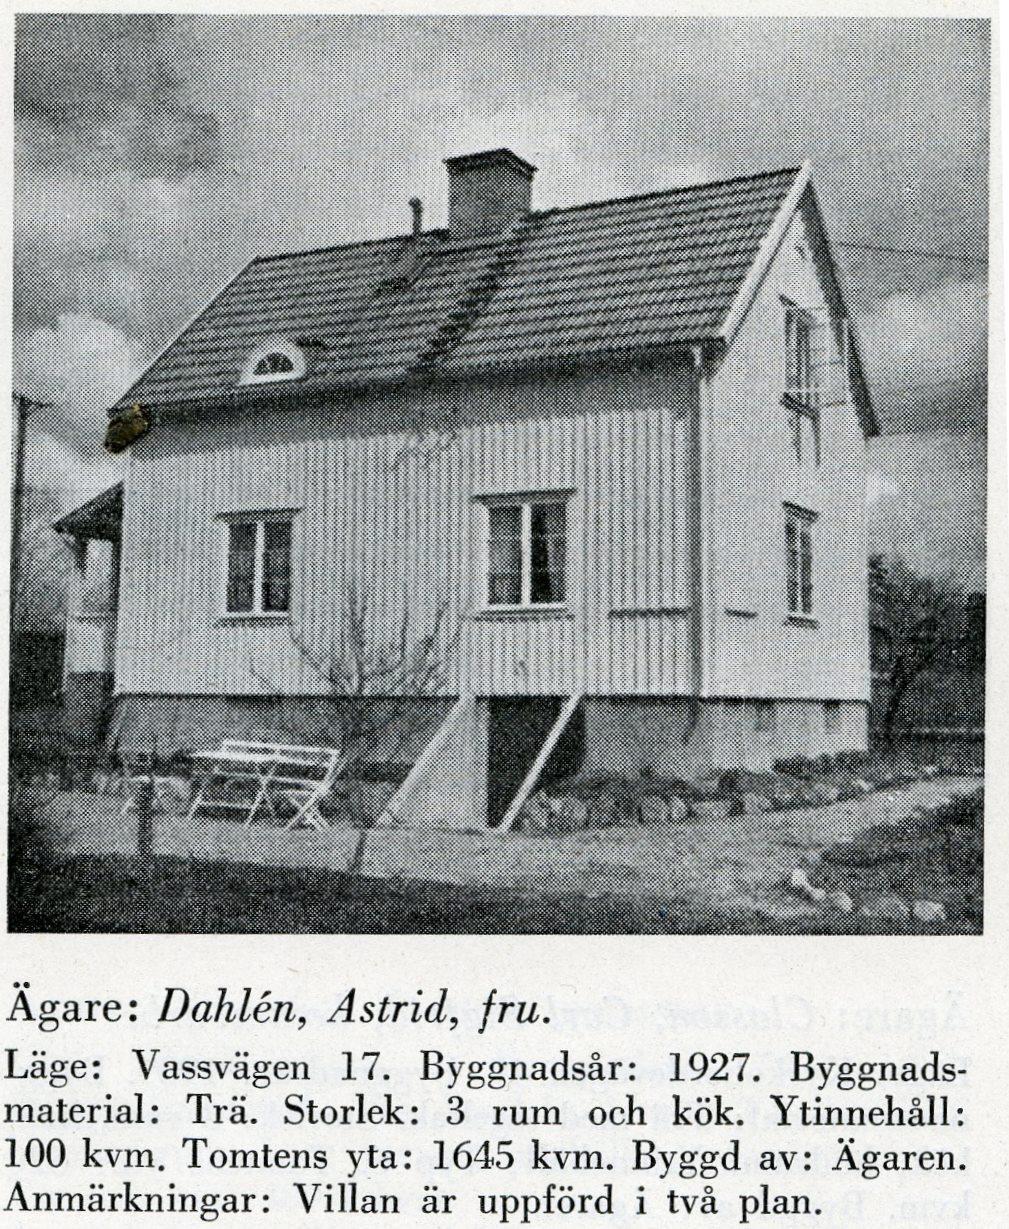 Vassvägen 17 Huset byggt: 1927